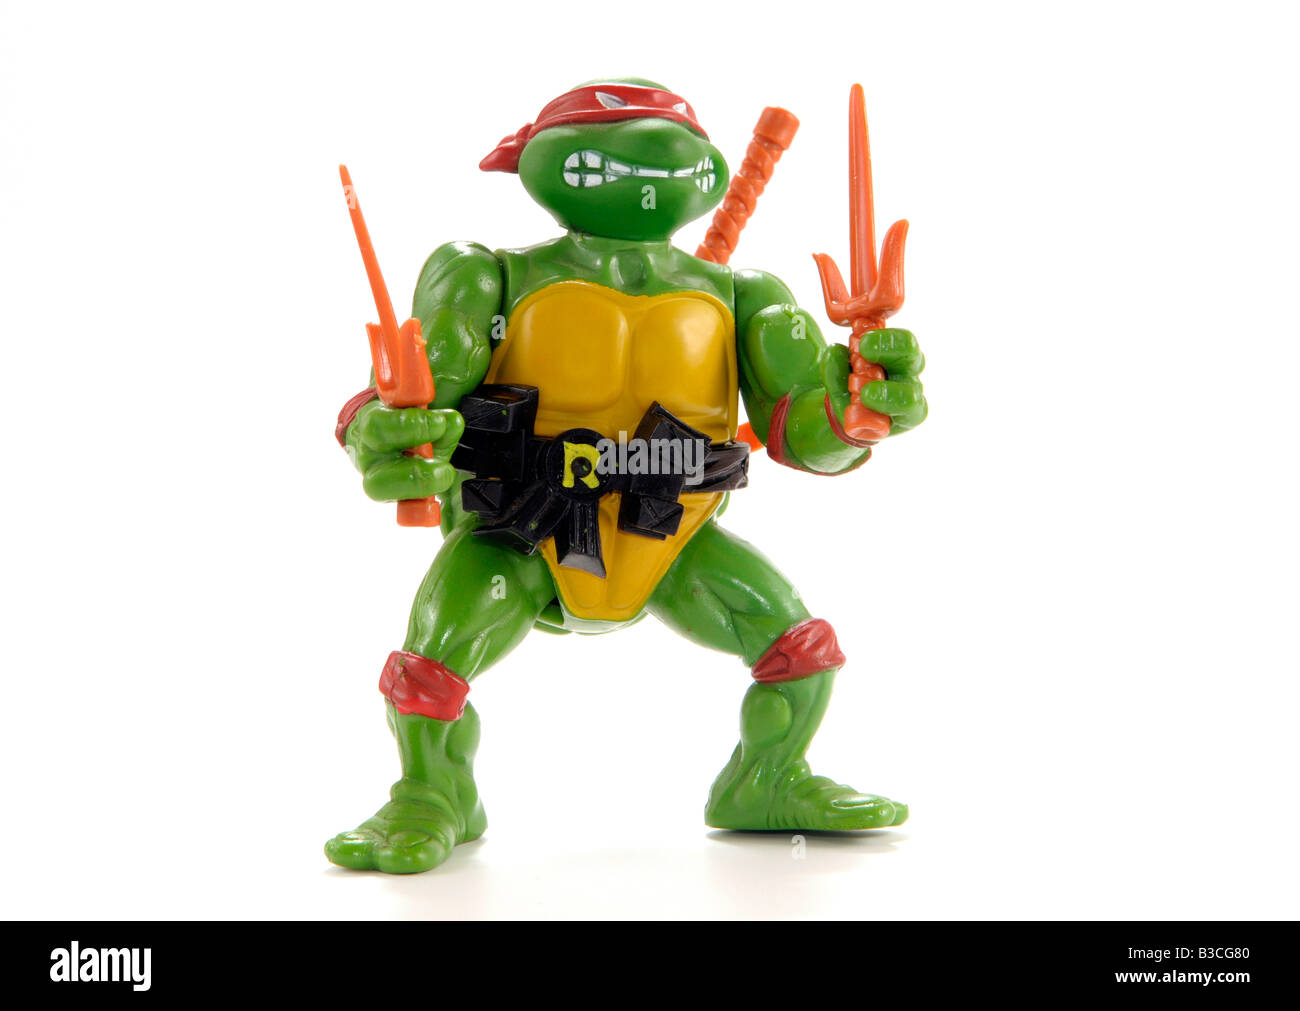 https://c8.alamy.com/comp/B3CG80/teenage-mutant-ninja-turtle-raphael-toy-silo-turtles-B3CG80.jpg